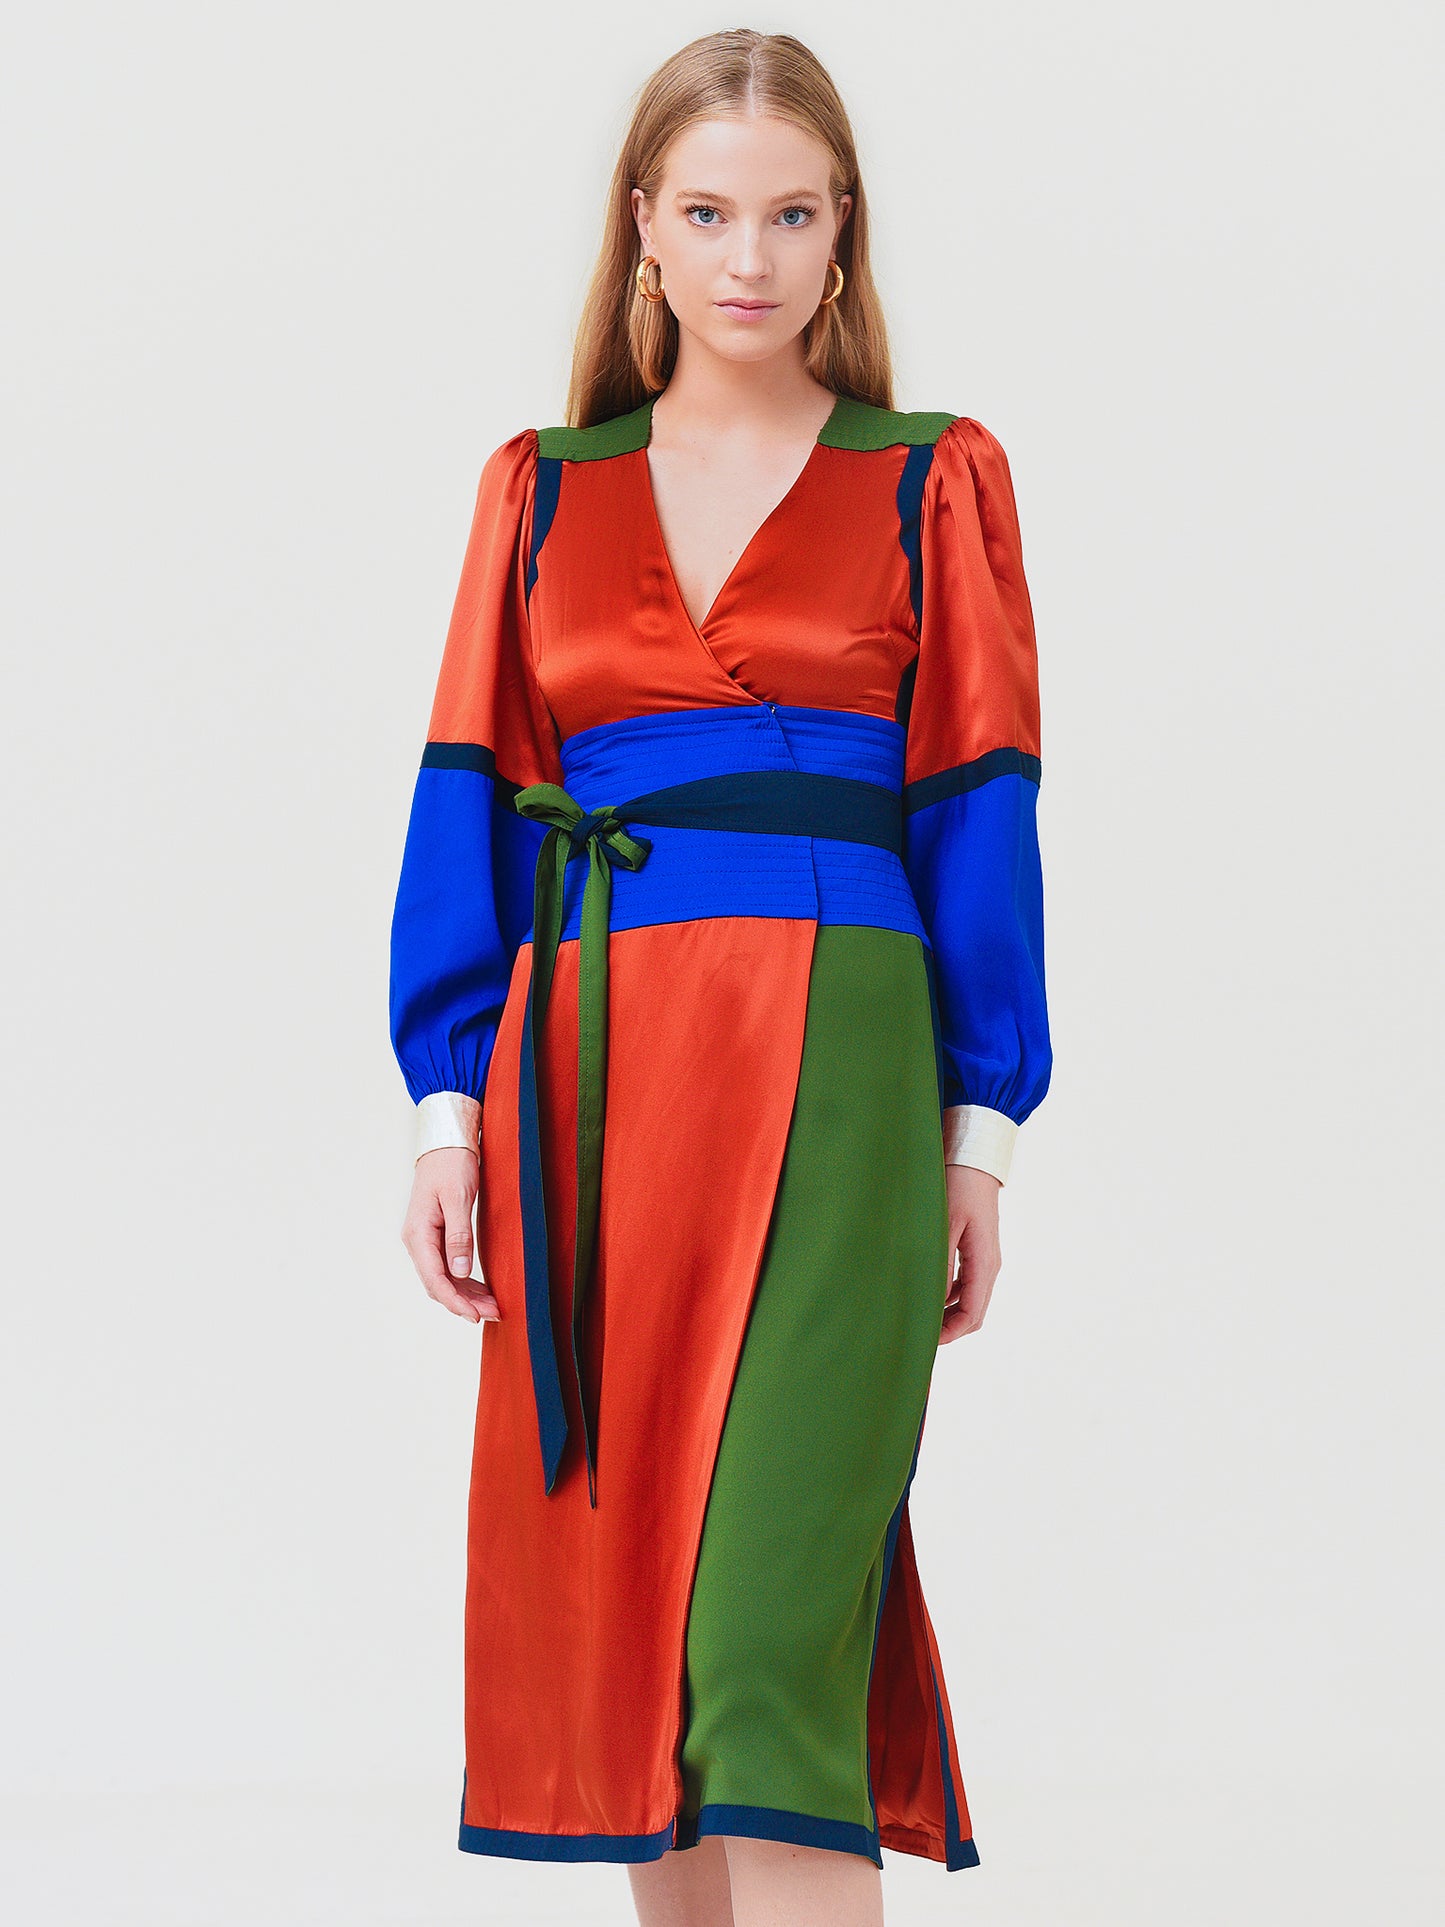 Tory Burch Women's Color-Block Wrap Dress